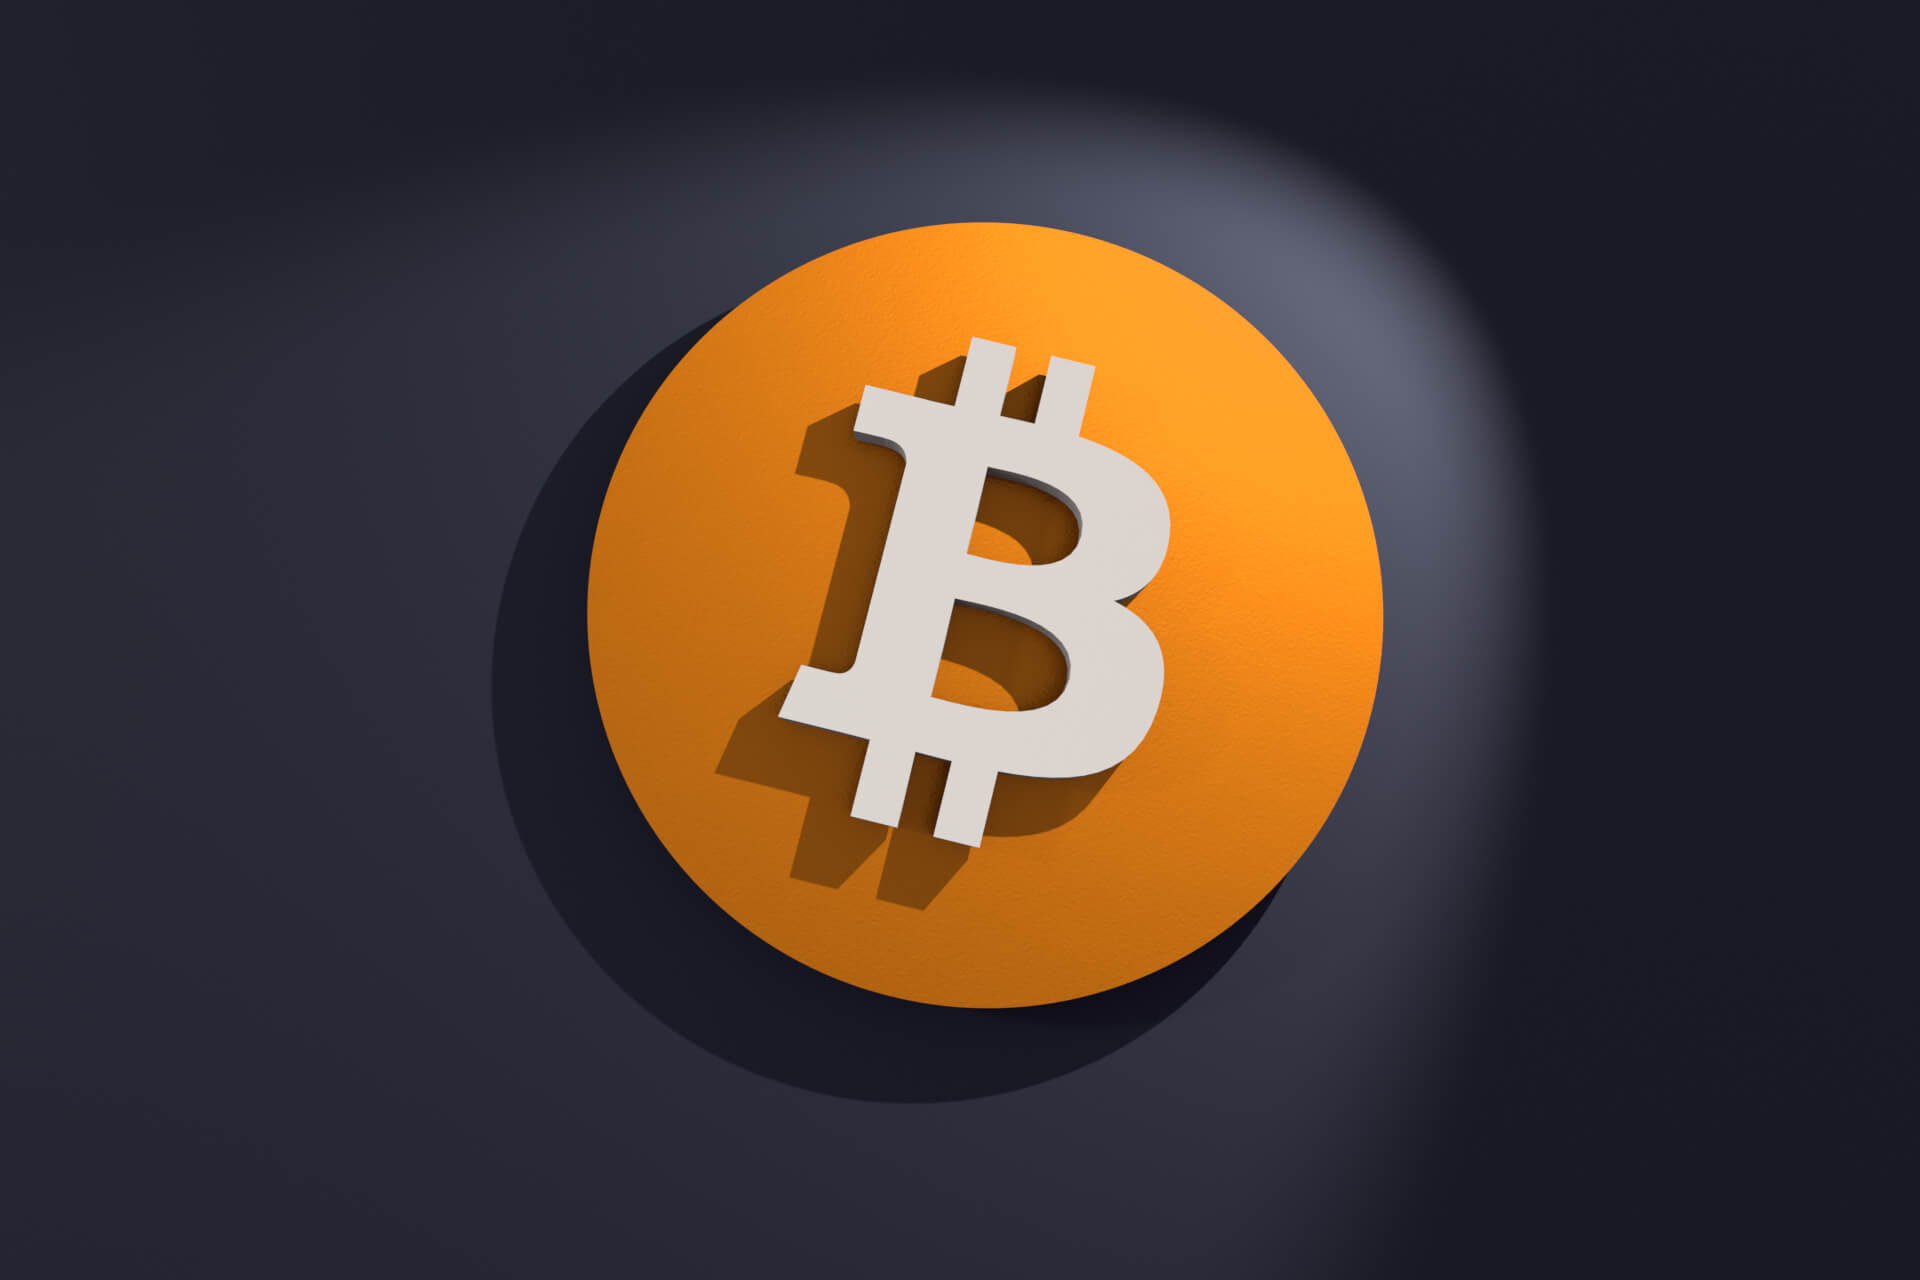 Bitcoin B Logo front view free image download